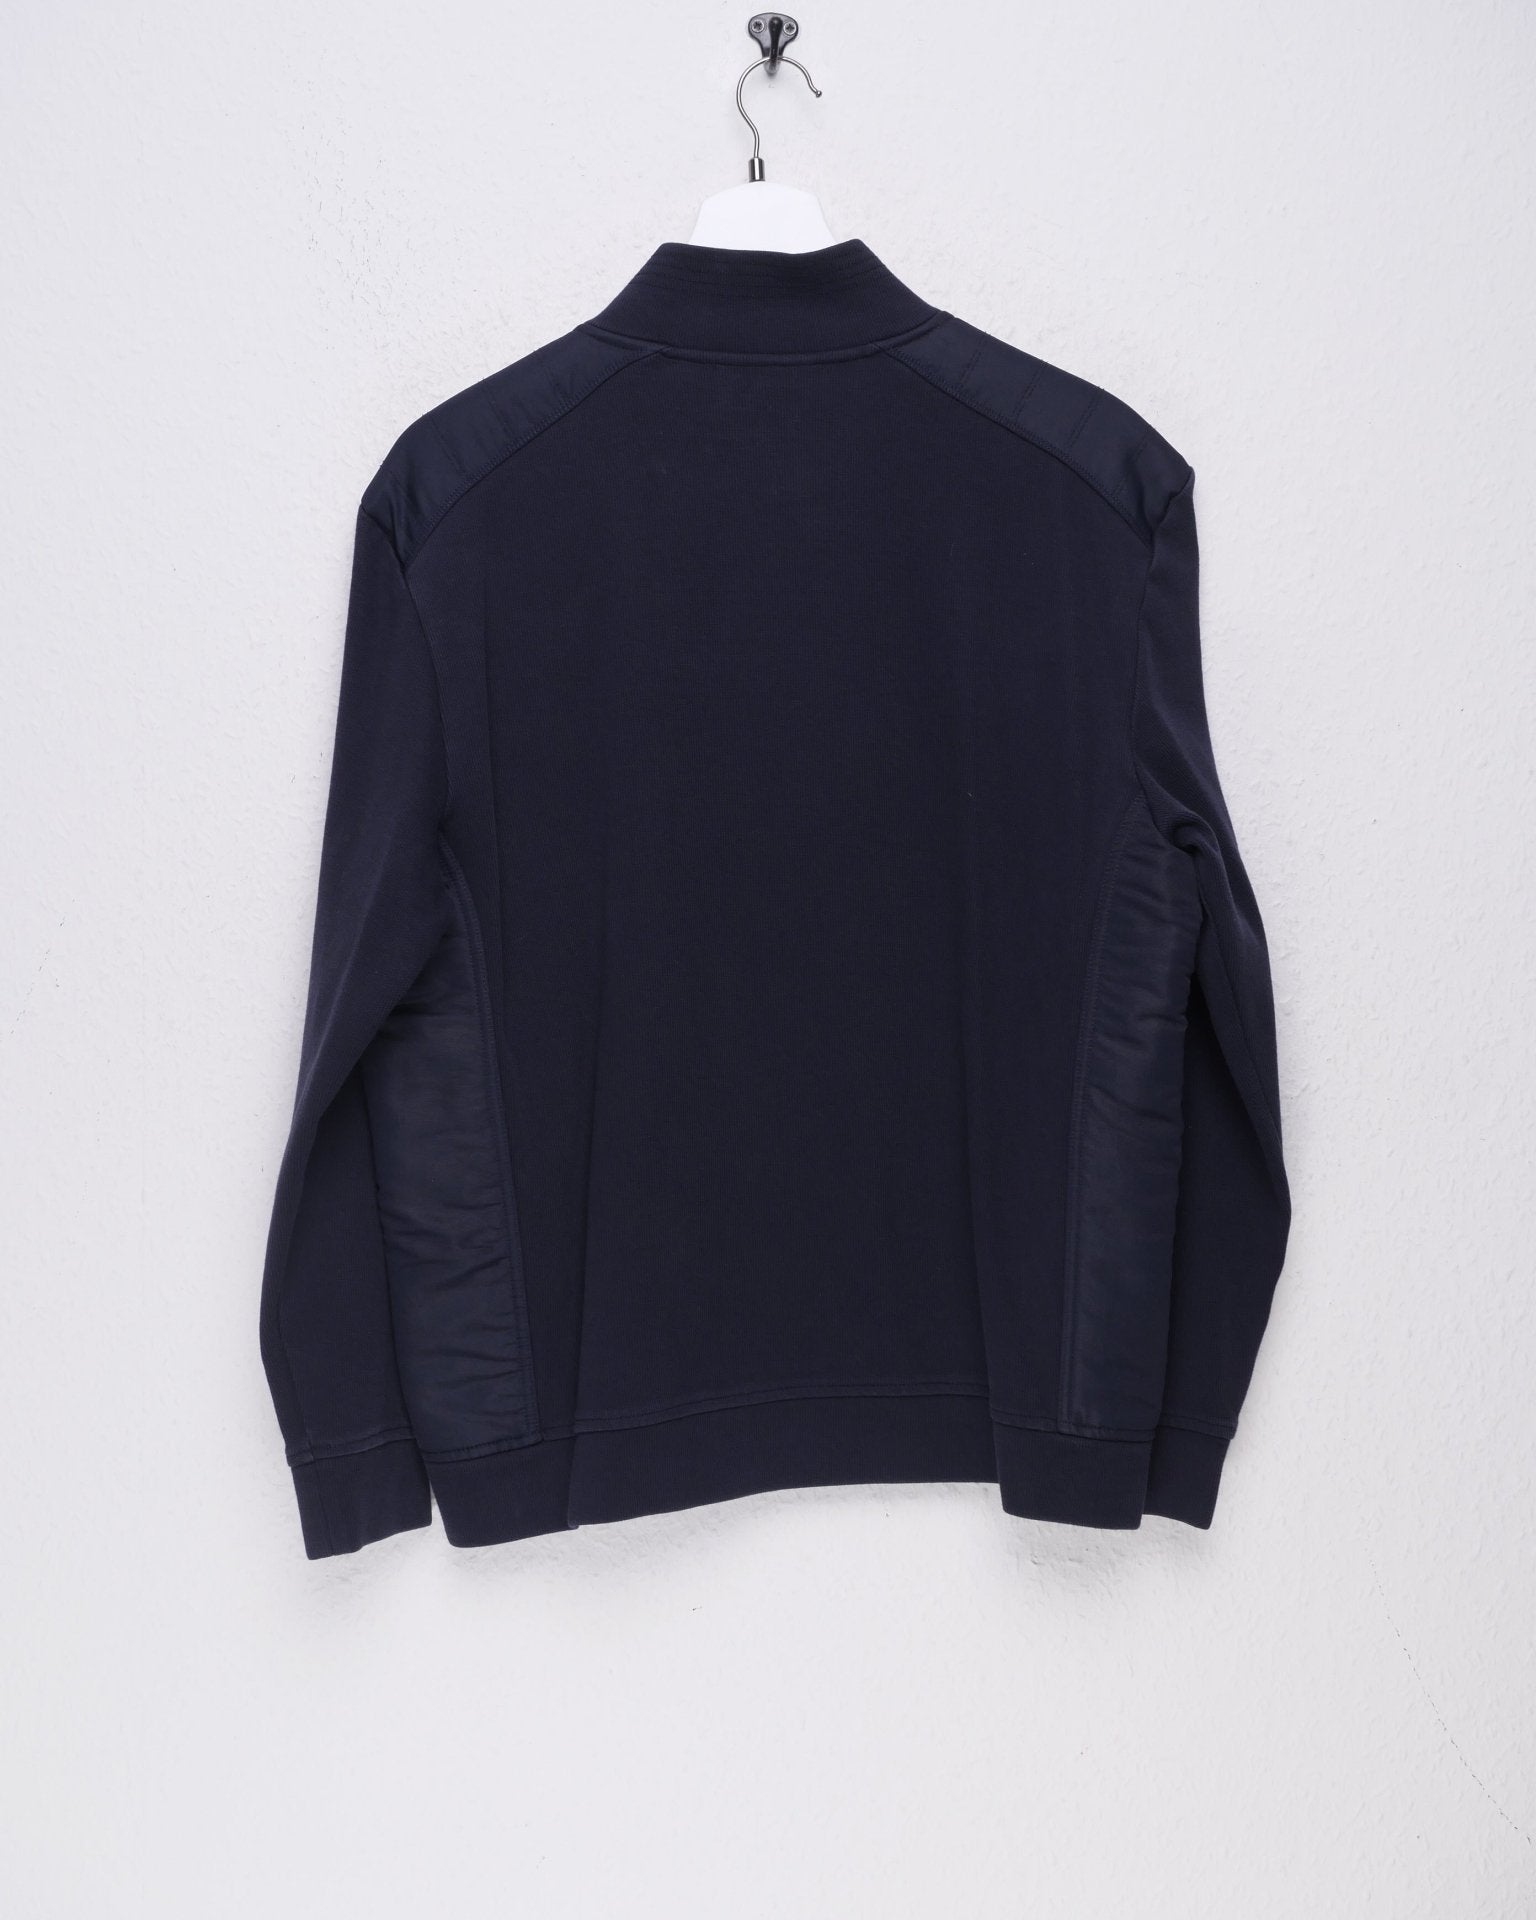 Calvin Klein mirrored Logo dark Zip Sweater - Peeces